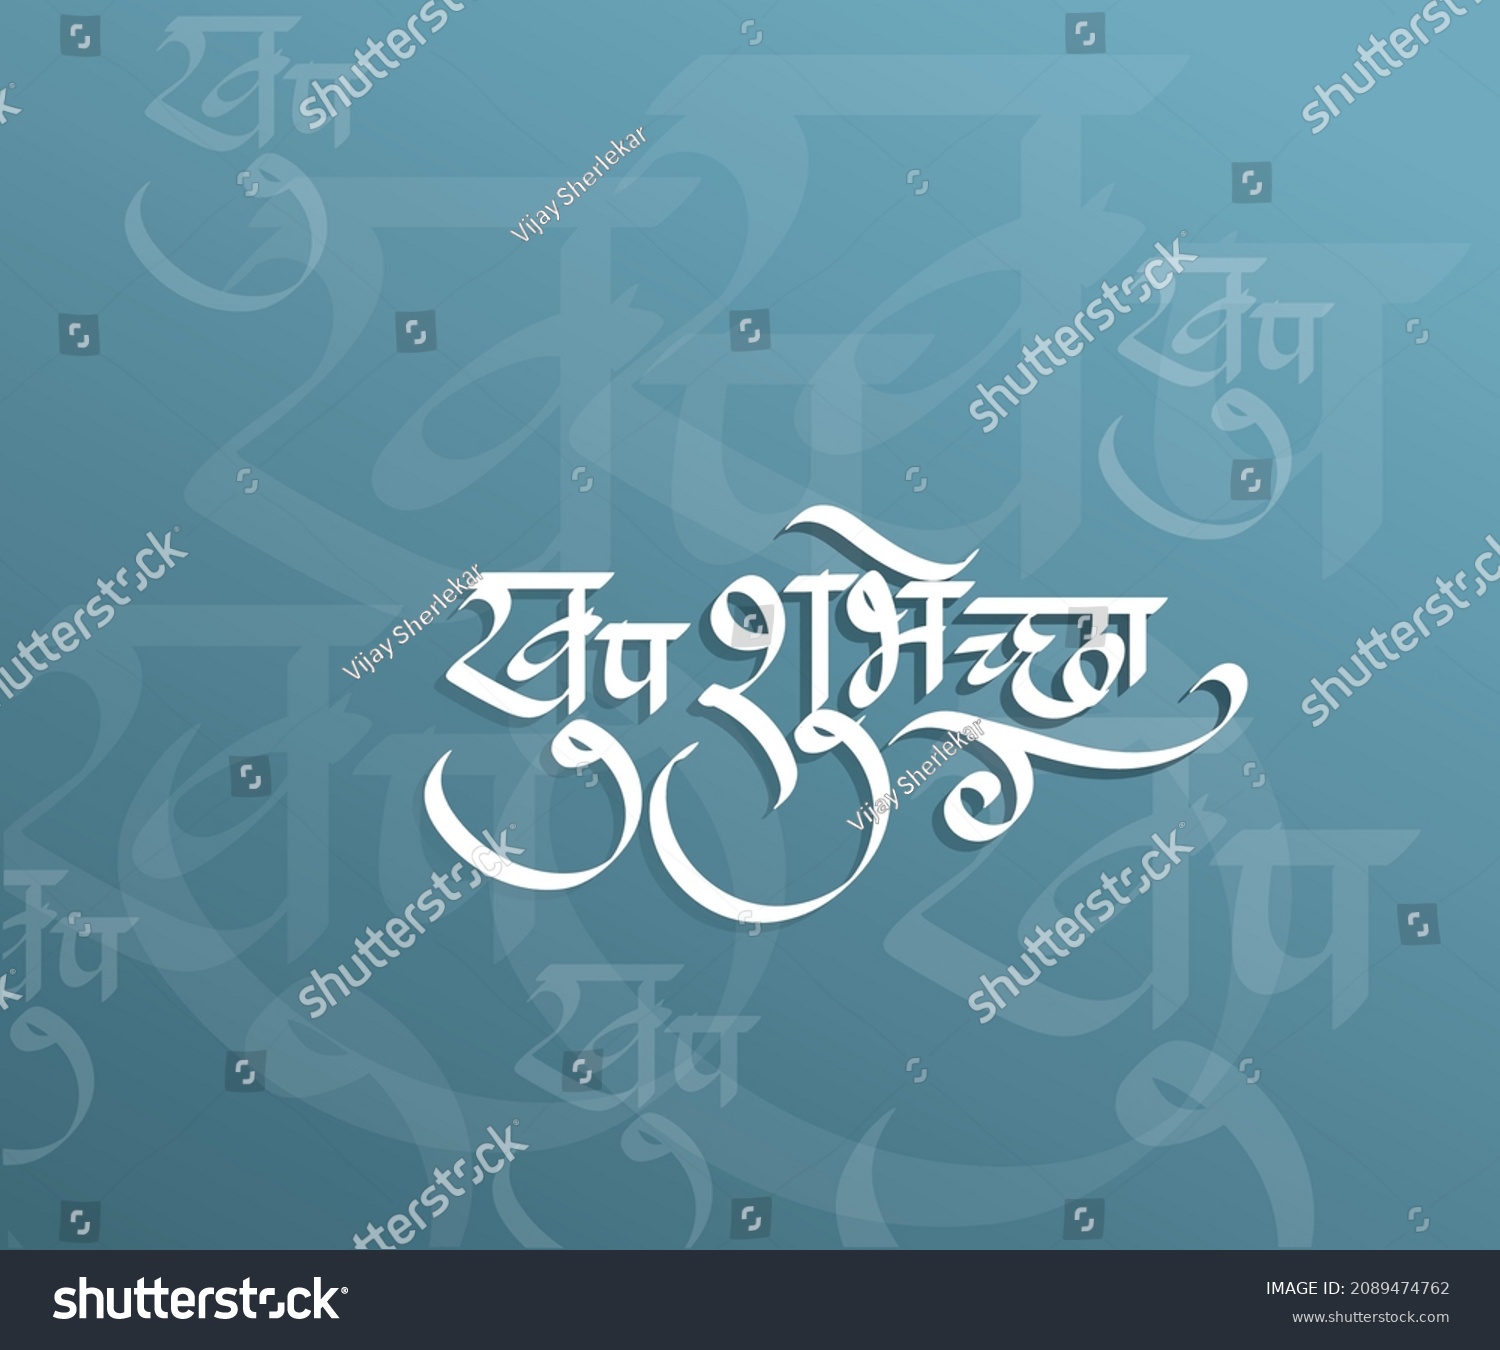 SVG of creative marathi Calligraphy and typography 